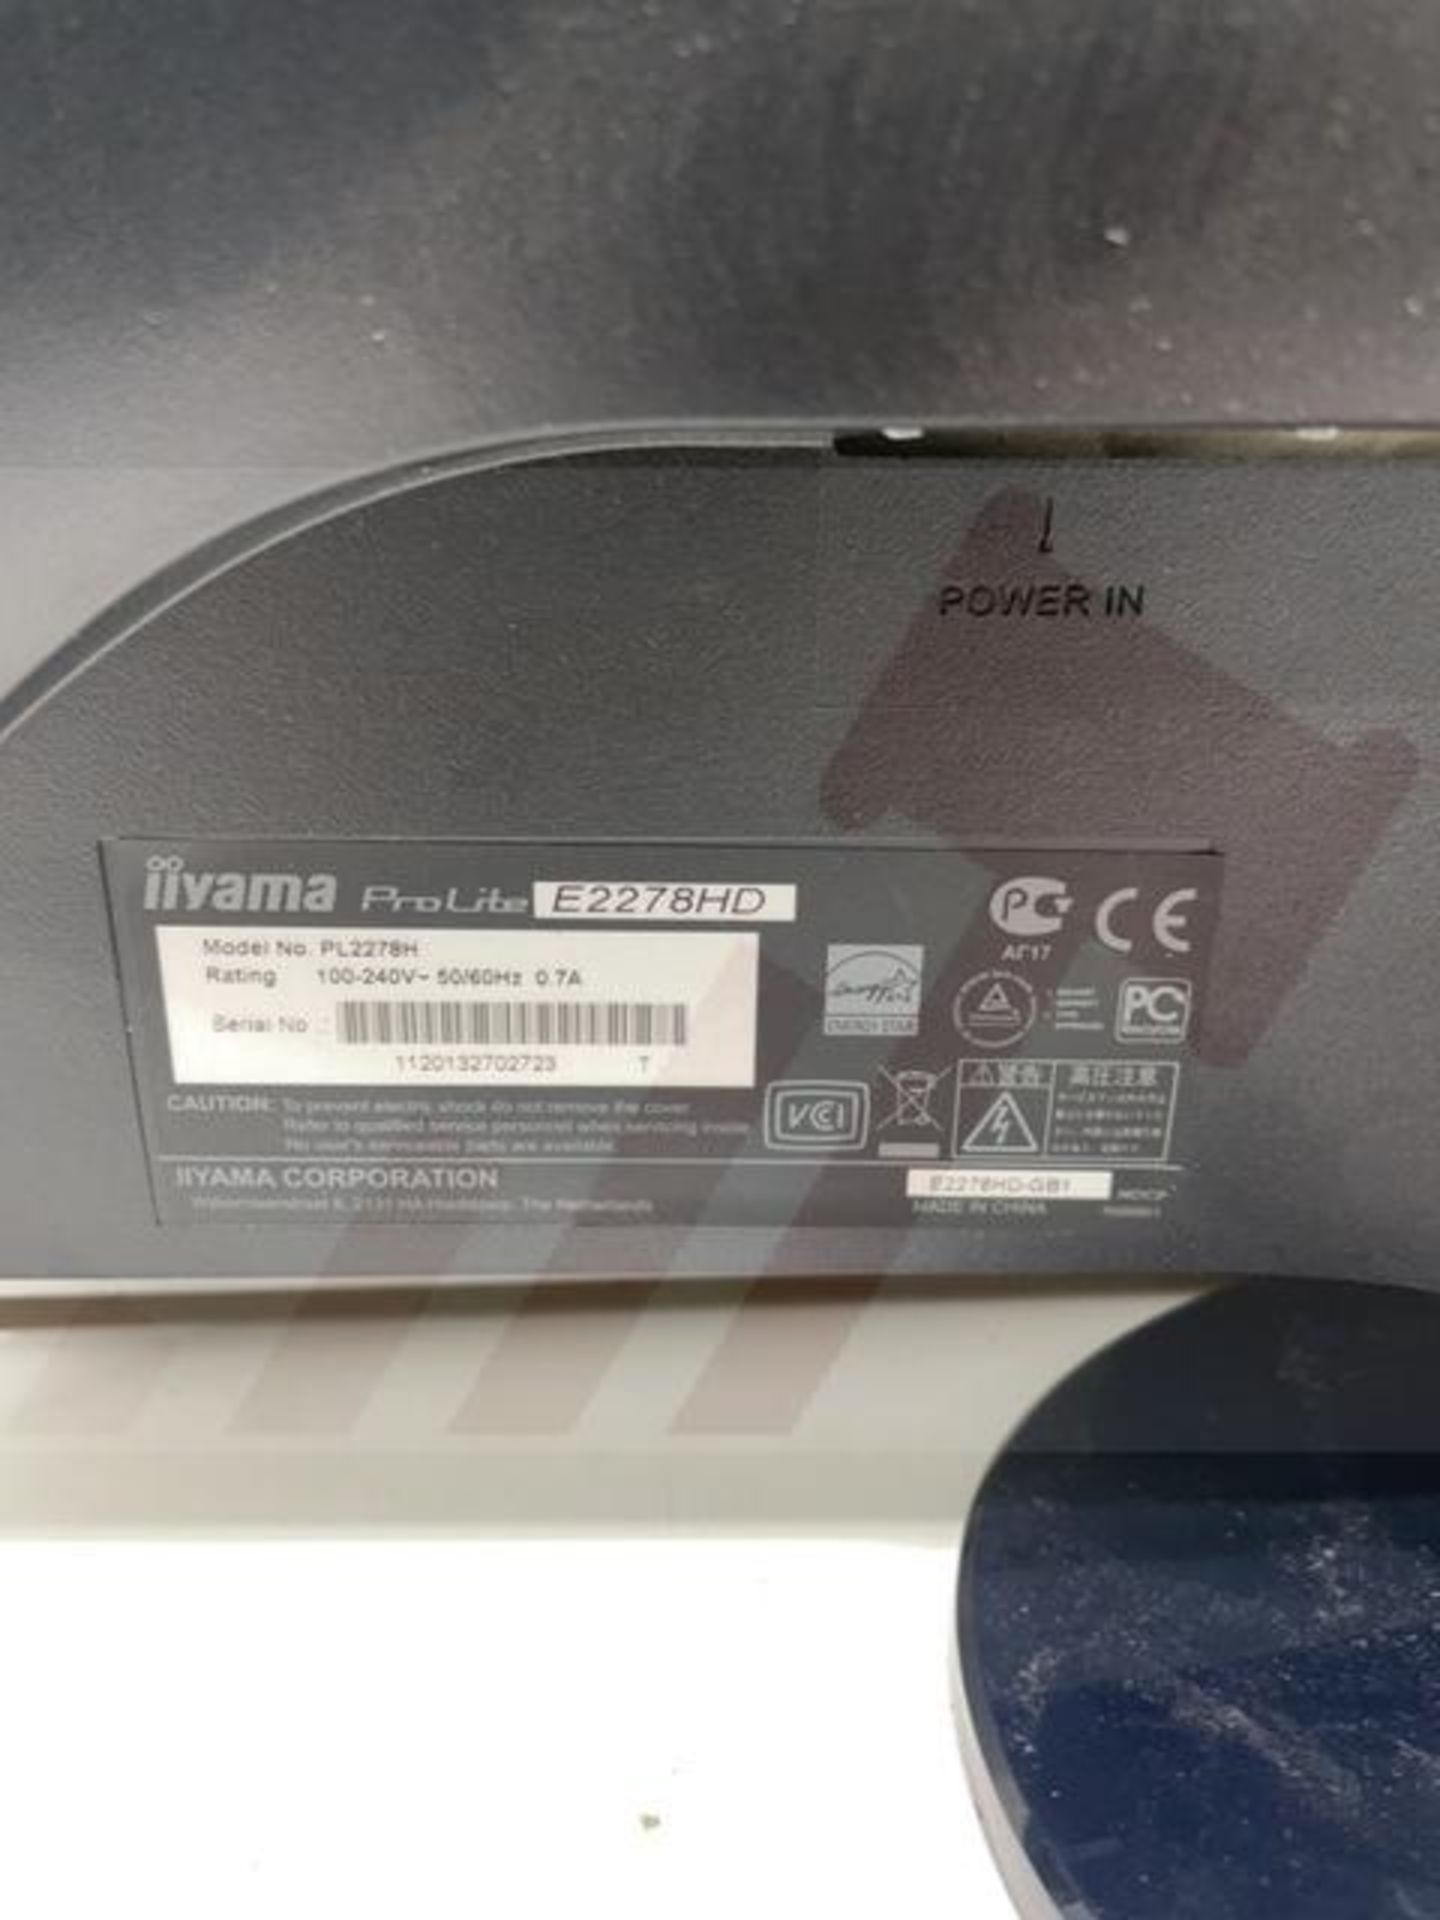 4X iiyama Computer Monitors | Prolite E2278HD | 22" SCREEN - Image 4 of 4